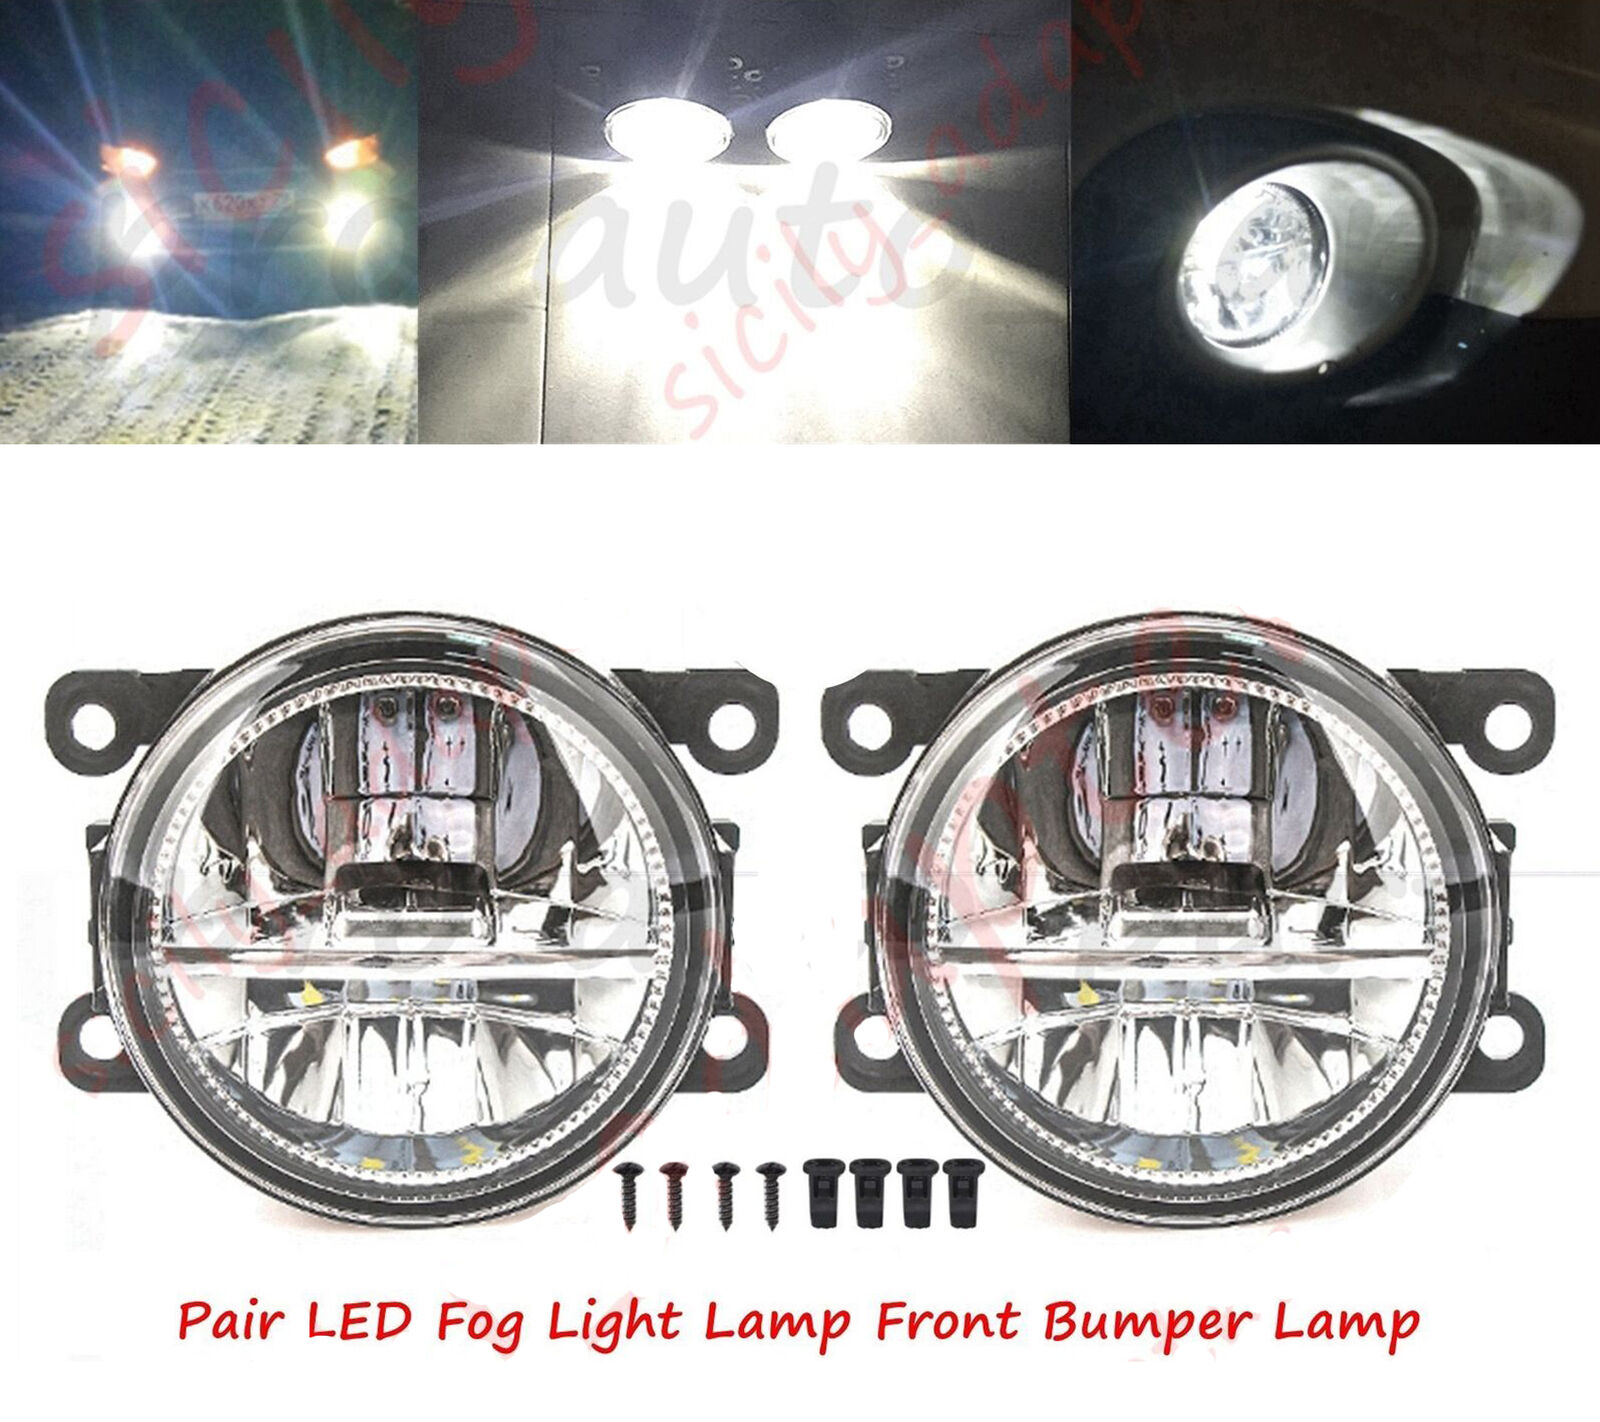 LED Pair Fog Light Bumper Lamp For Subaru Impreza 2012-2018 LED Bulbs Clear Lens